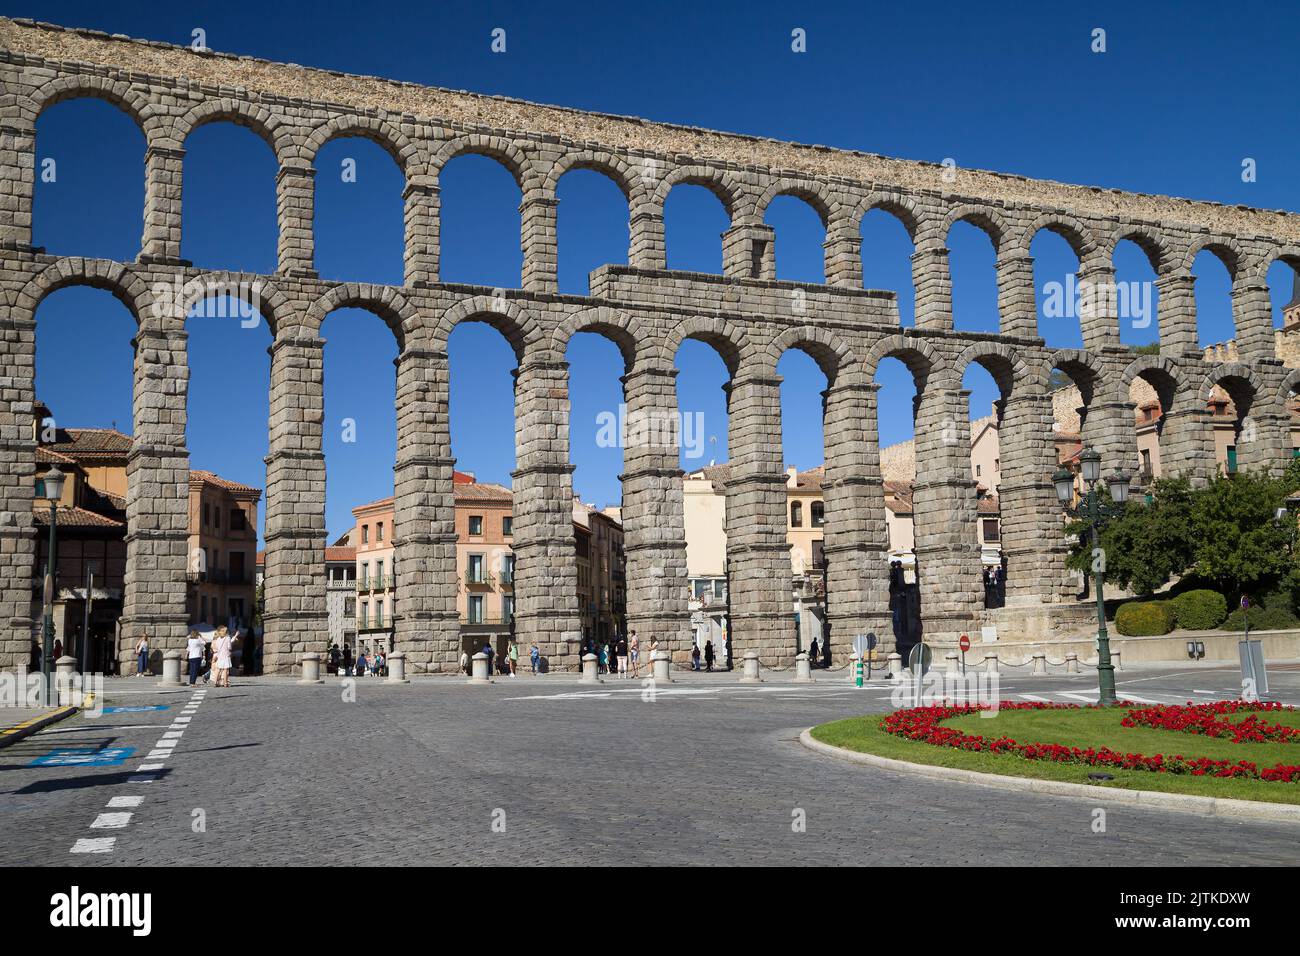 Segovia, España - 22 de agosto de 2020: Acueducto de Segovia desde Plaza Artilleria, Segovia, España. Foto de stock